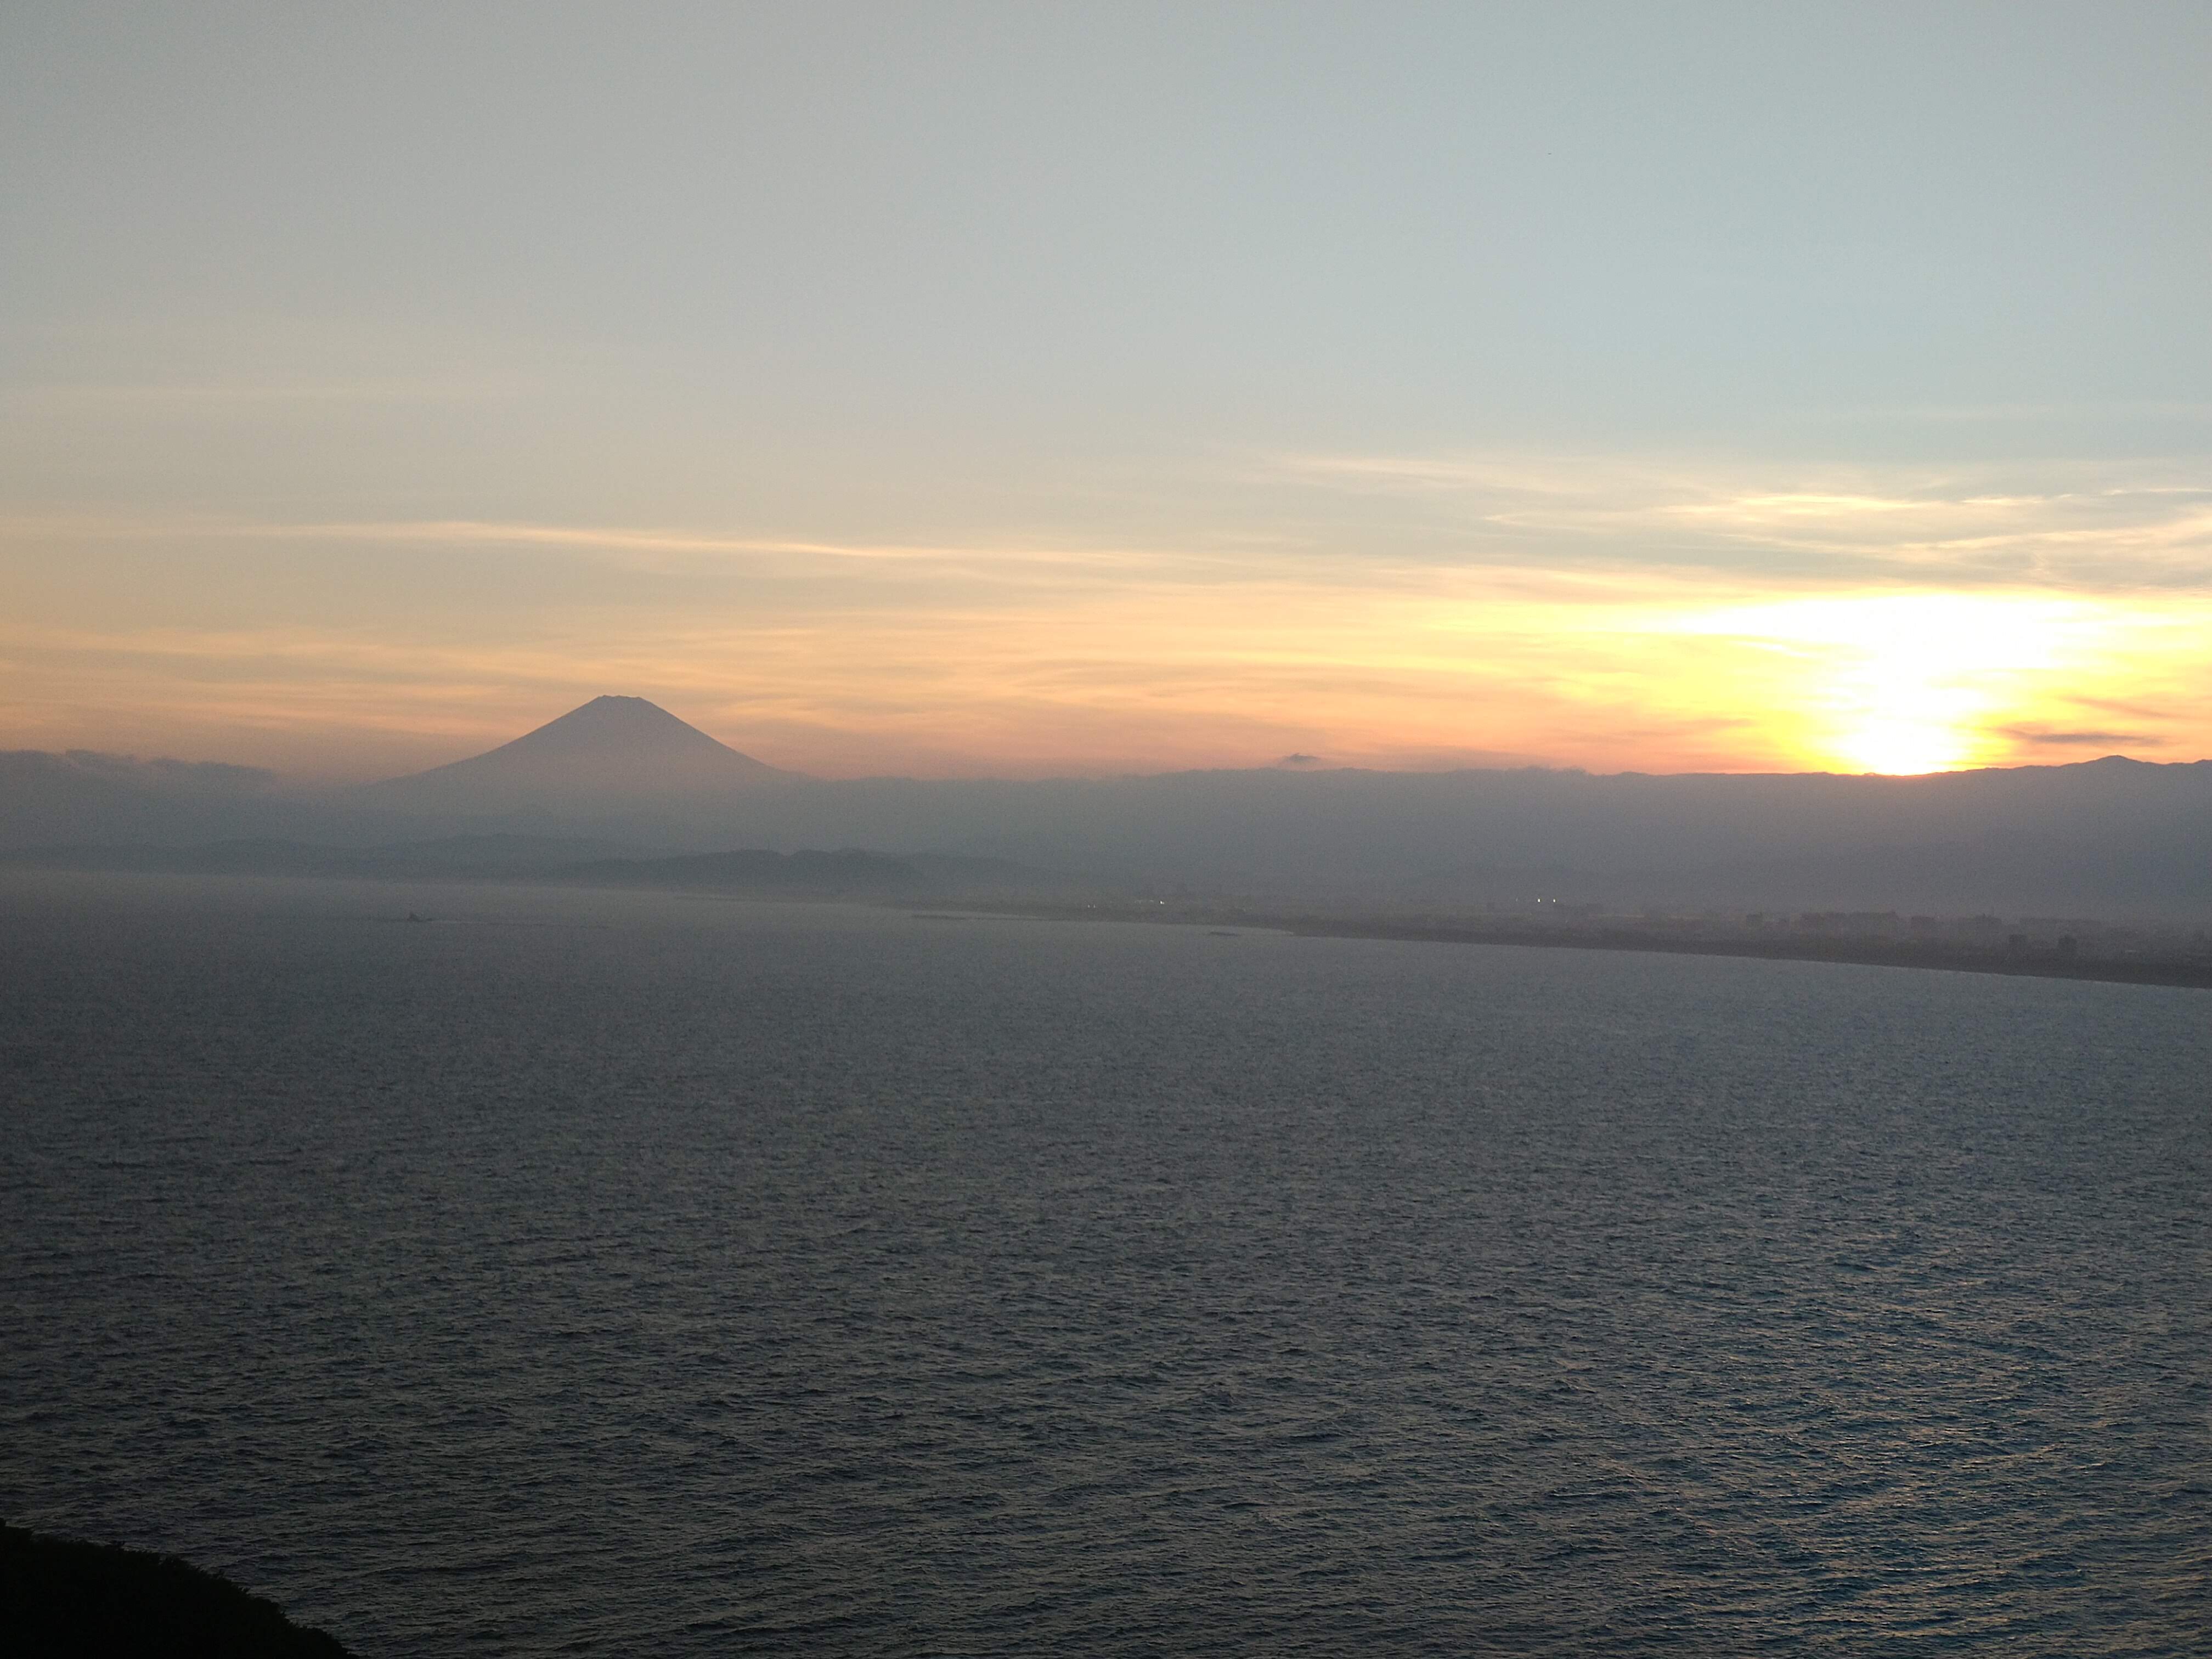 Fuji-san as seen from Lighthouse, Enoshima